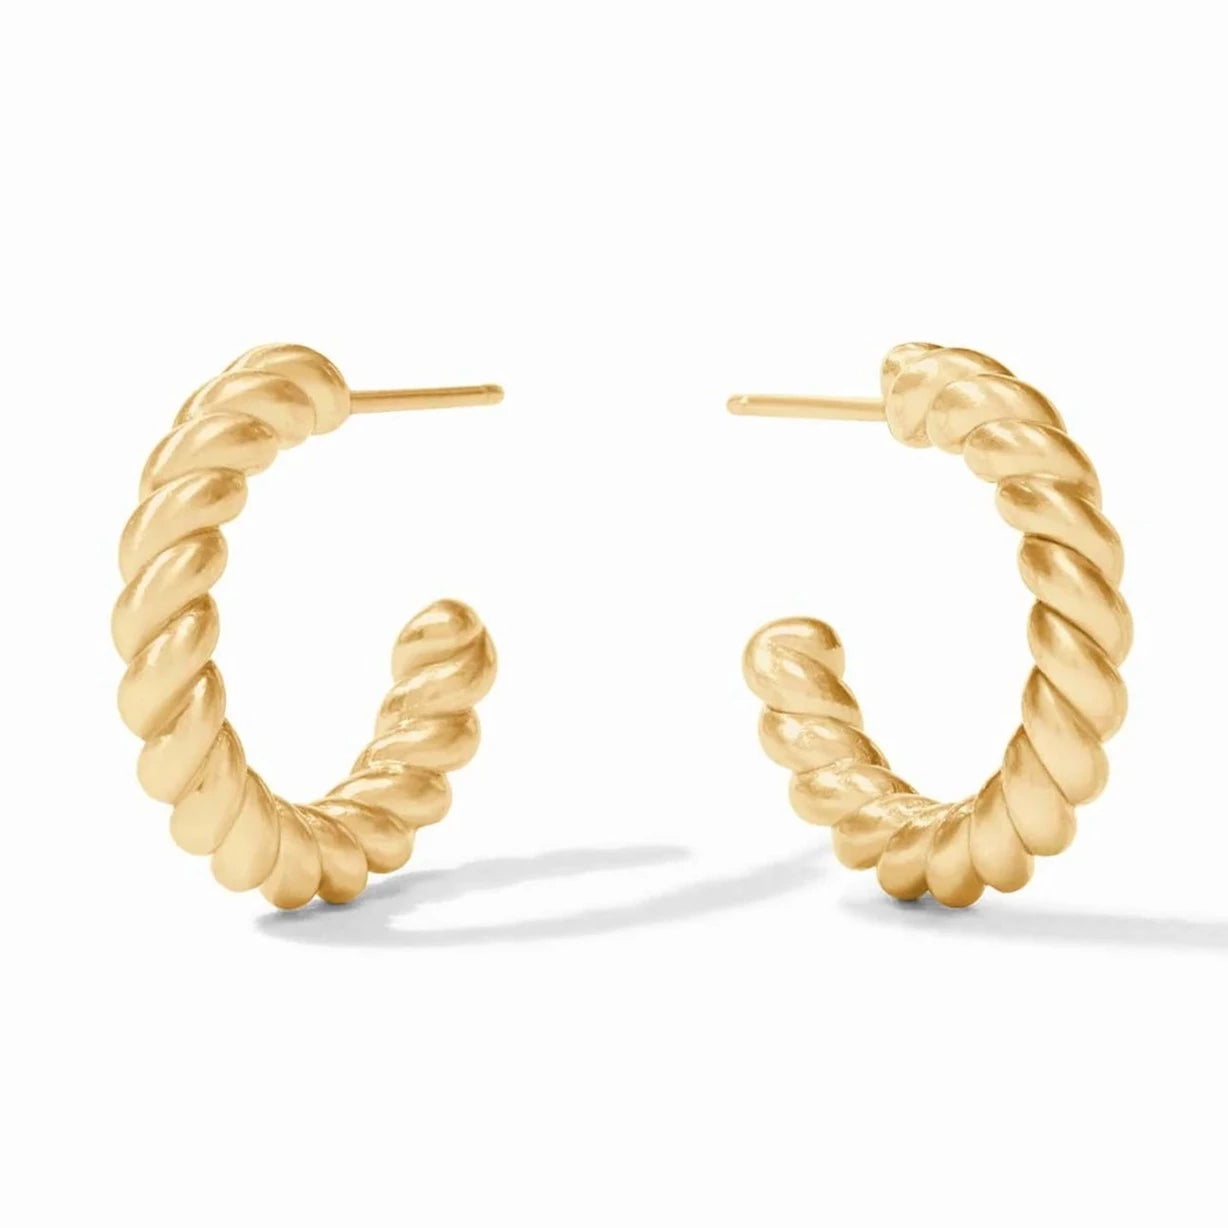 Julie Vos 24K Gold Plated Nassau Hoop Earrings, Small